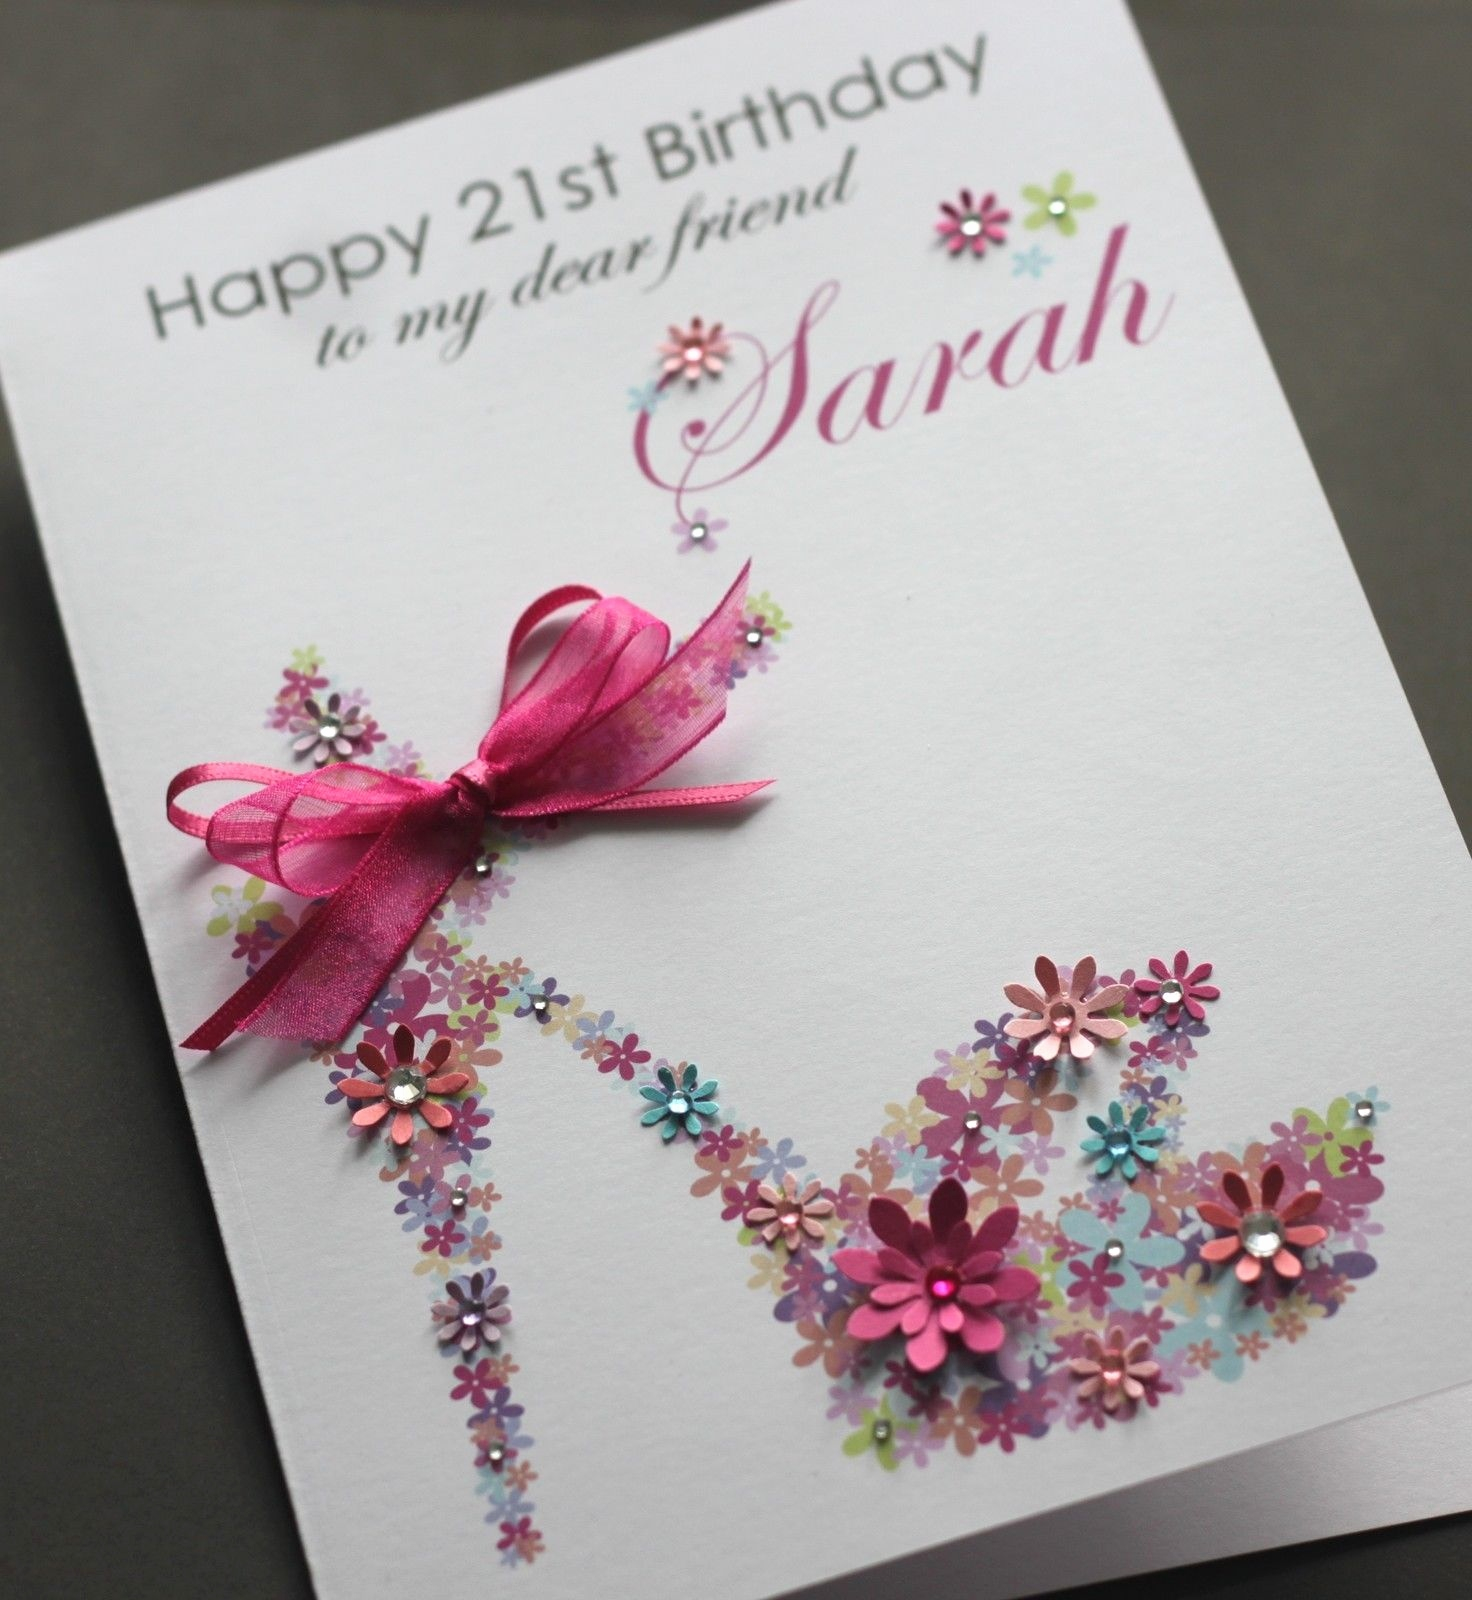 Handmade Birthday Card Ideas For Girlfriend 98 Handmade Birthday Cards For Girlfriend Diy Birthday Cards For